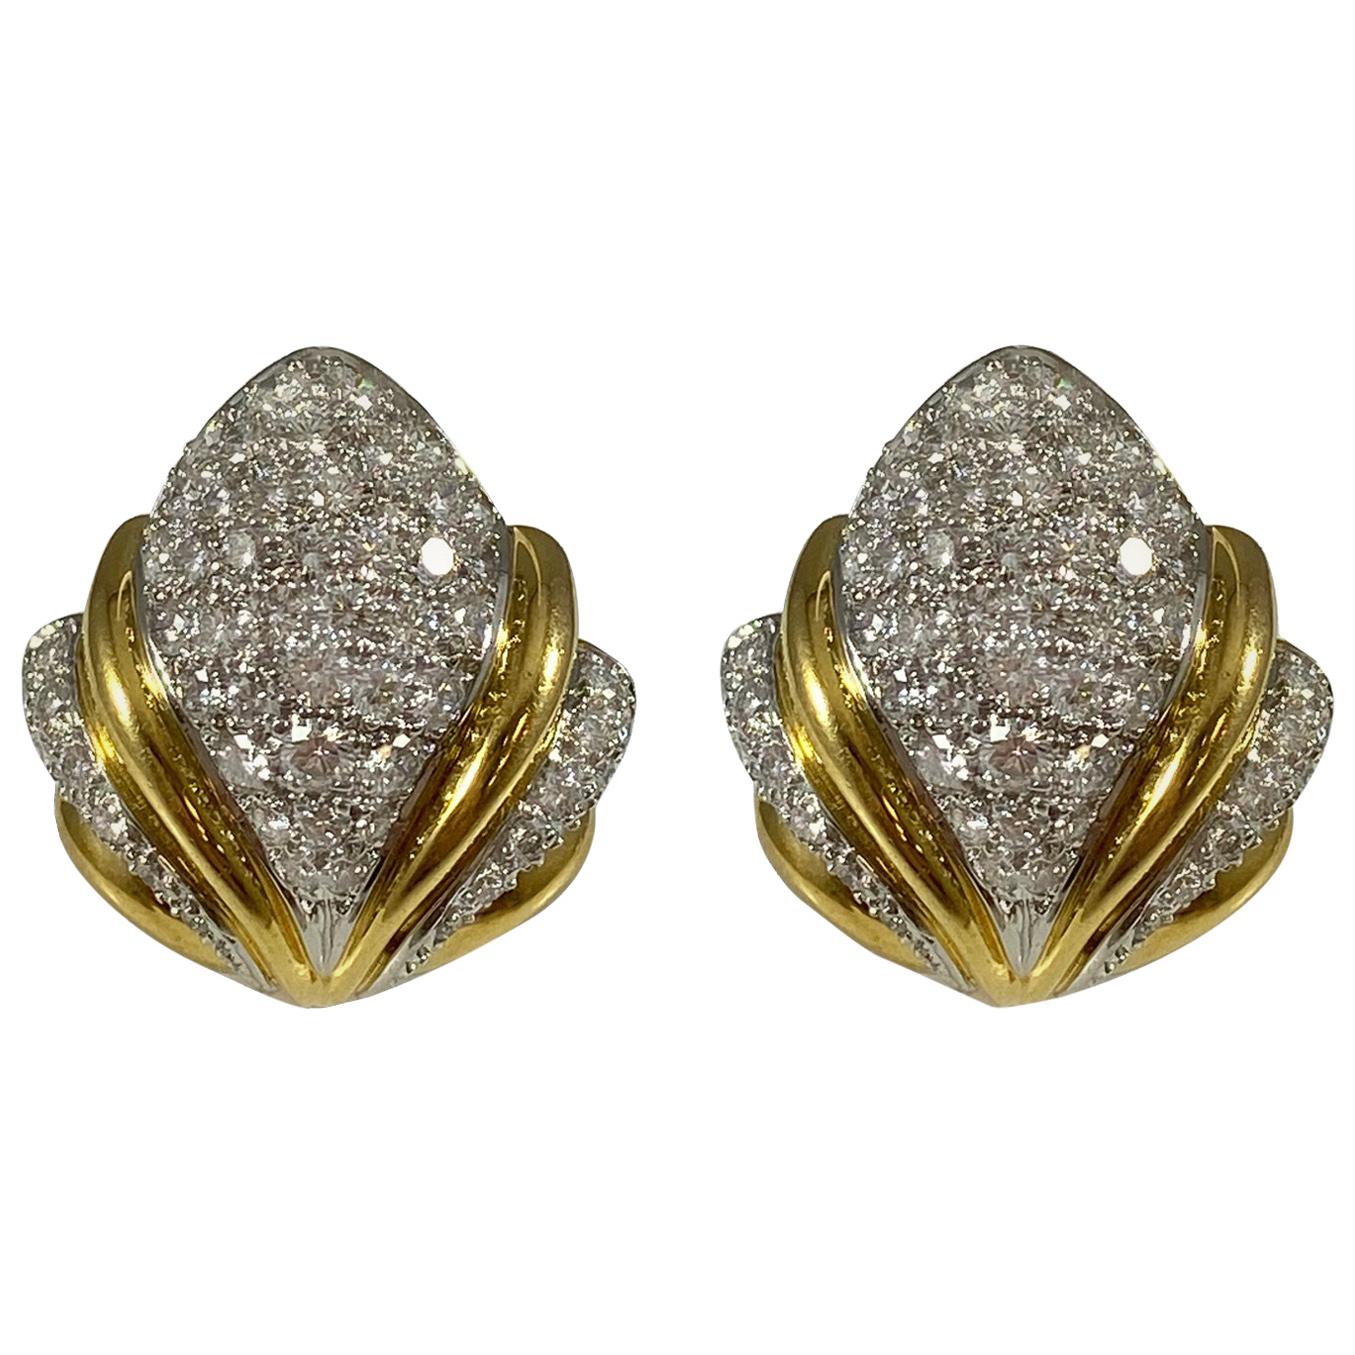 Hammerman Brothers Diamond Fleur de Lis Earrings For Sale